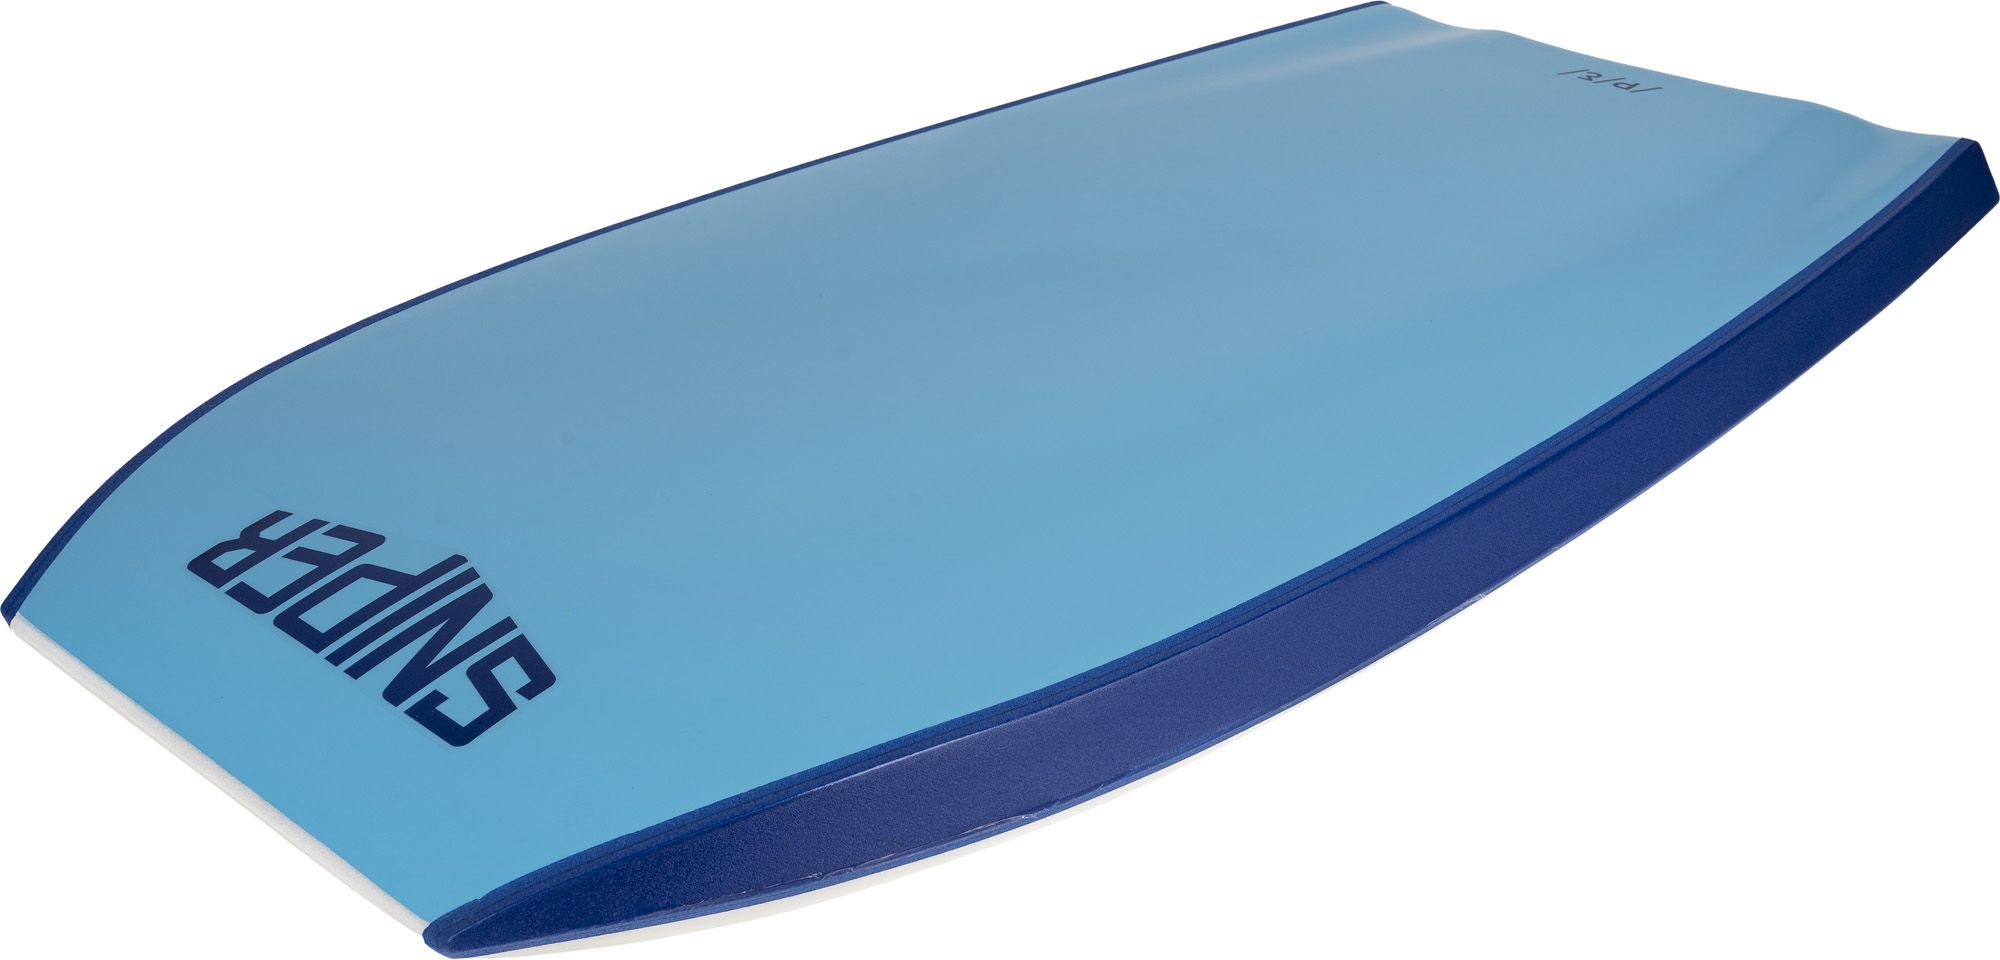 Planche de bodyboard Shenron PE Blanc / Bleu - Improve Series 